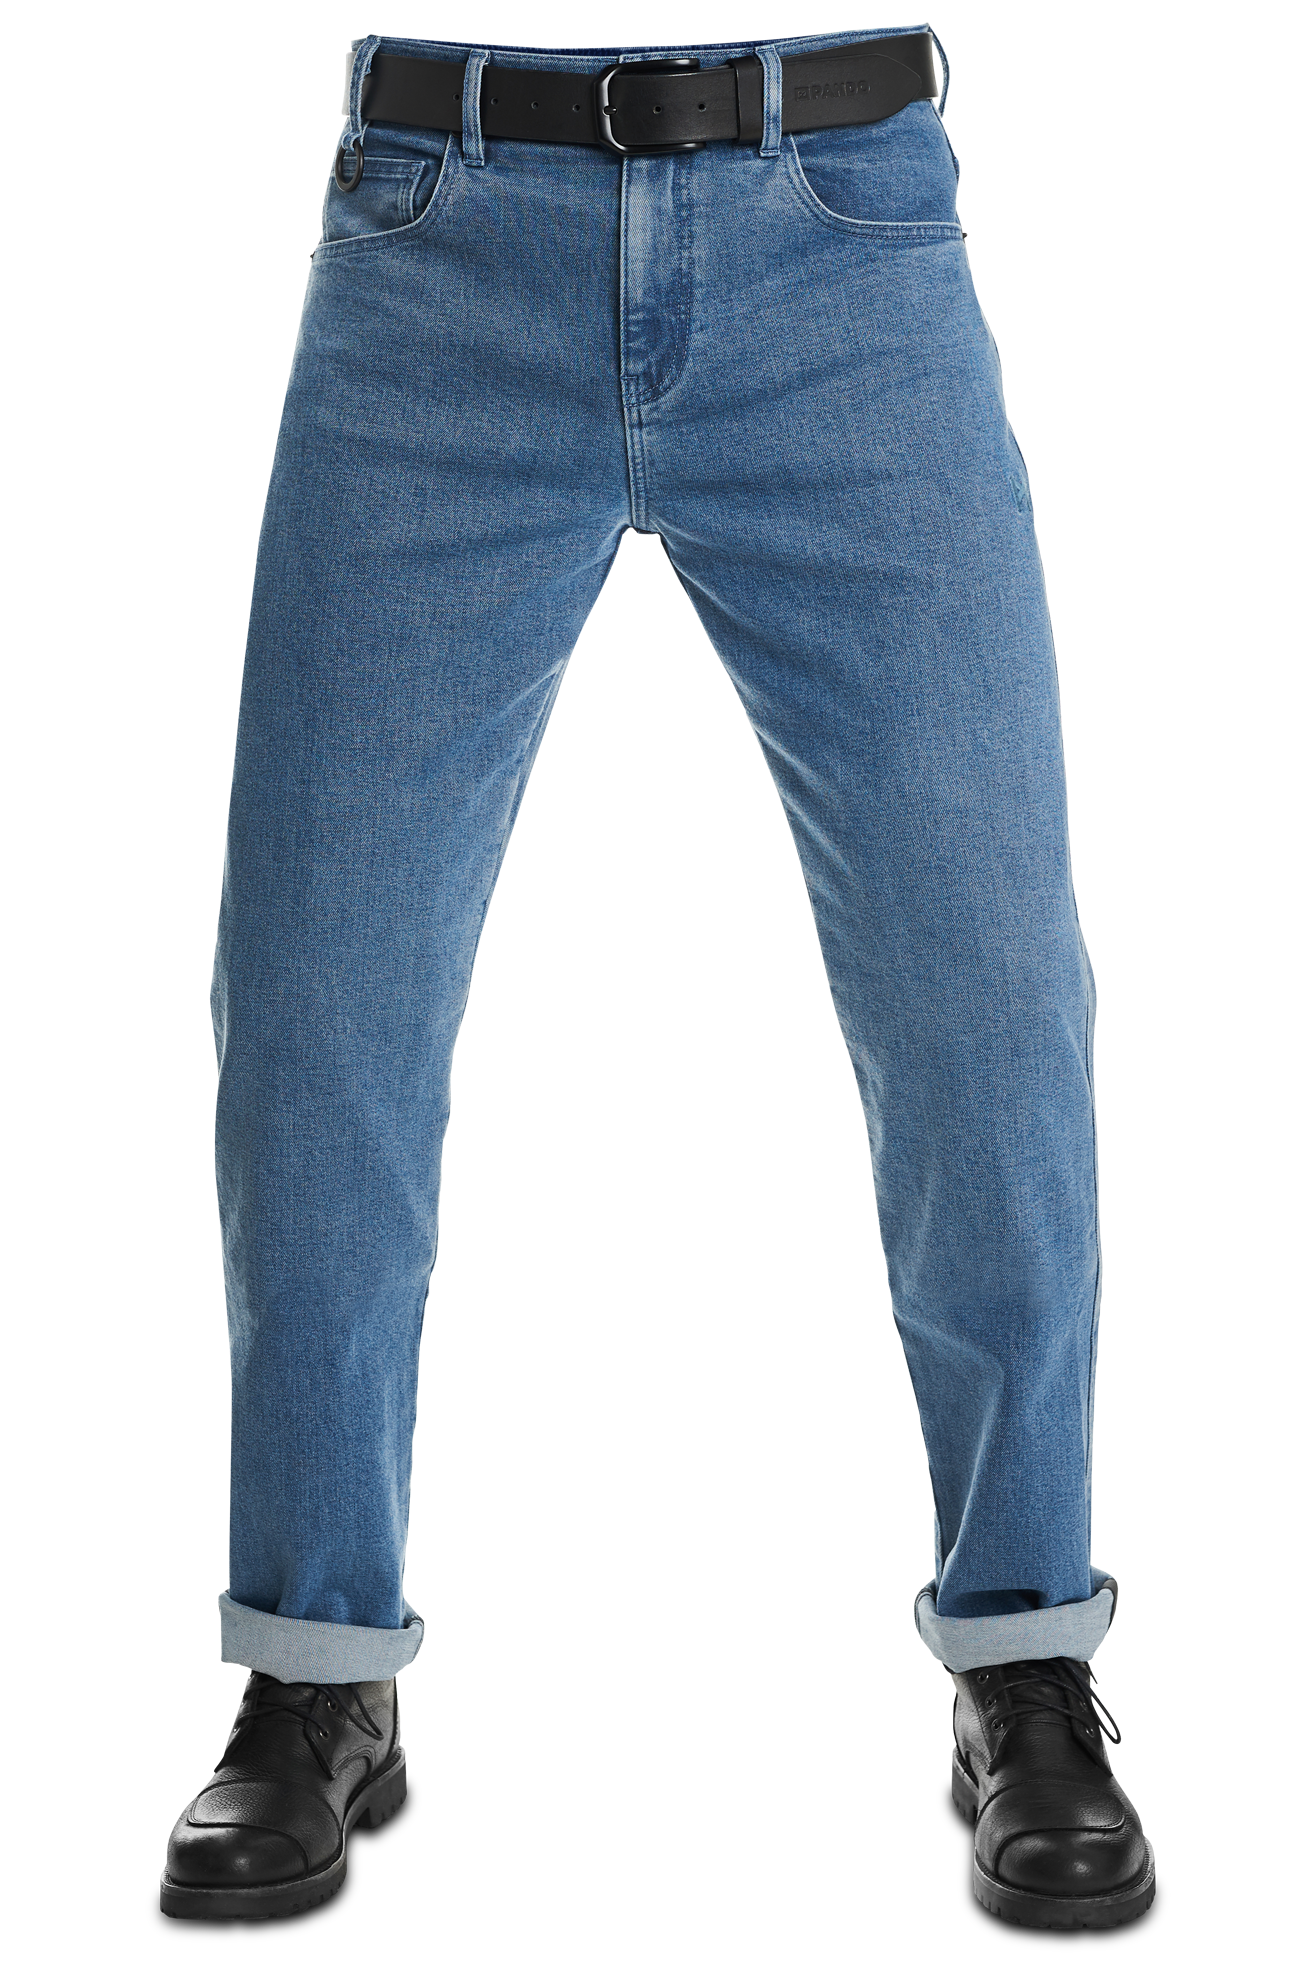 Pando moto Mark Kev 02 Jeans